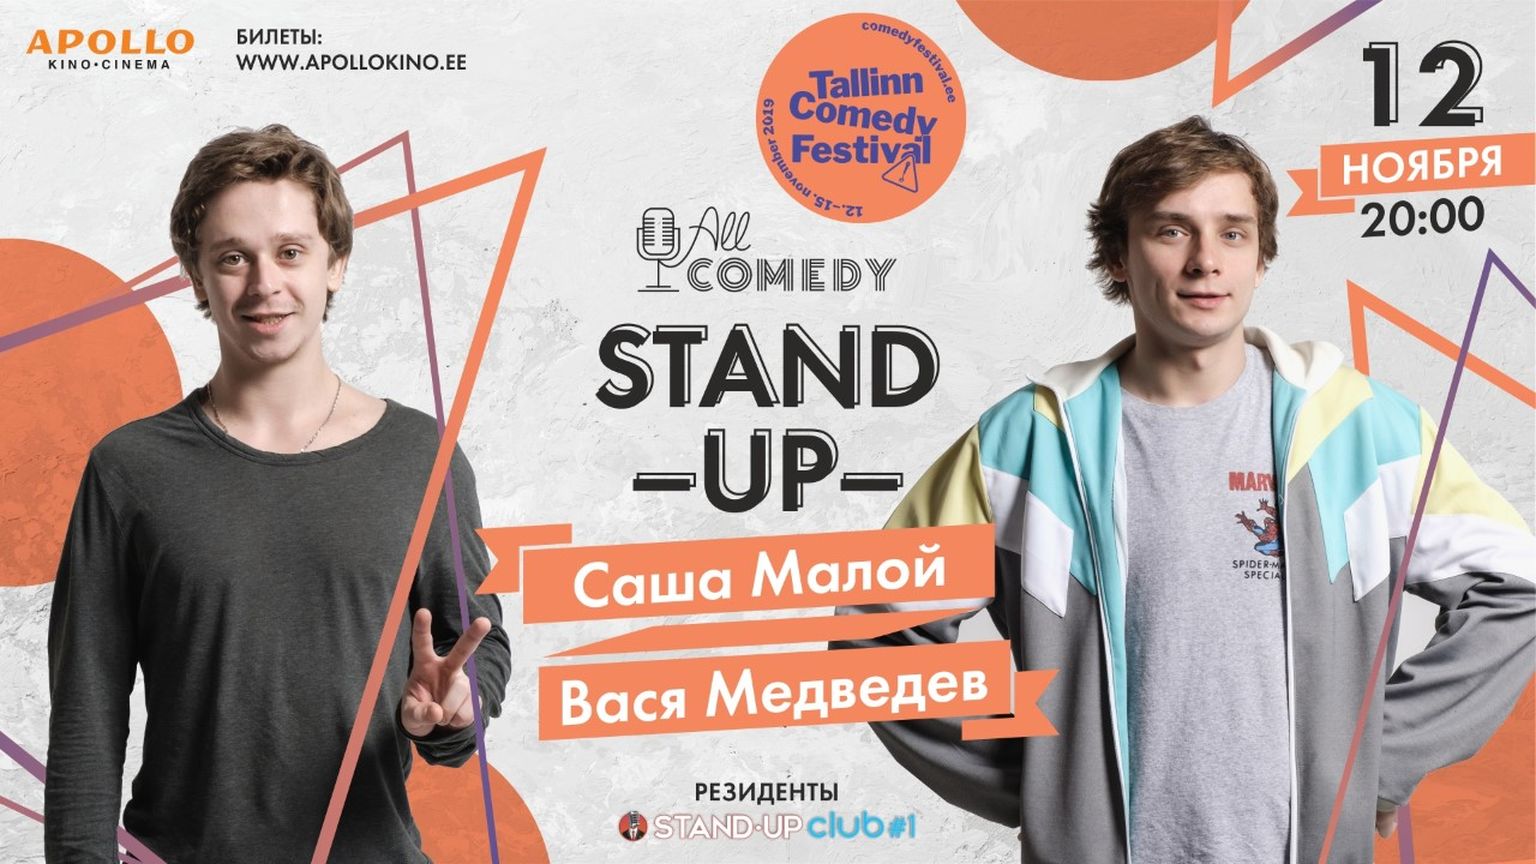 Tallinn Comedy Festival